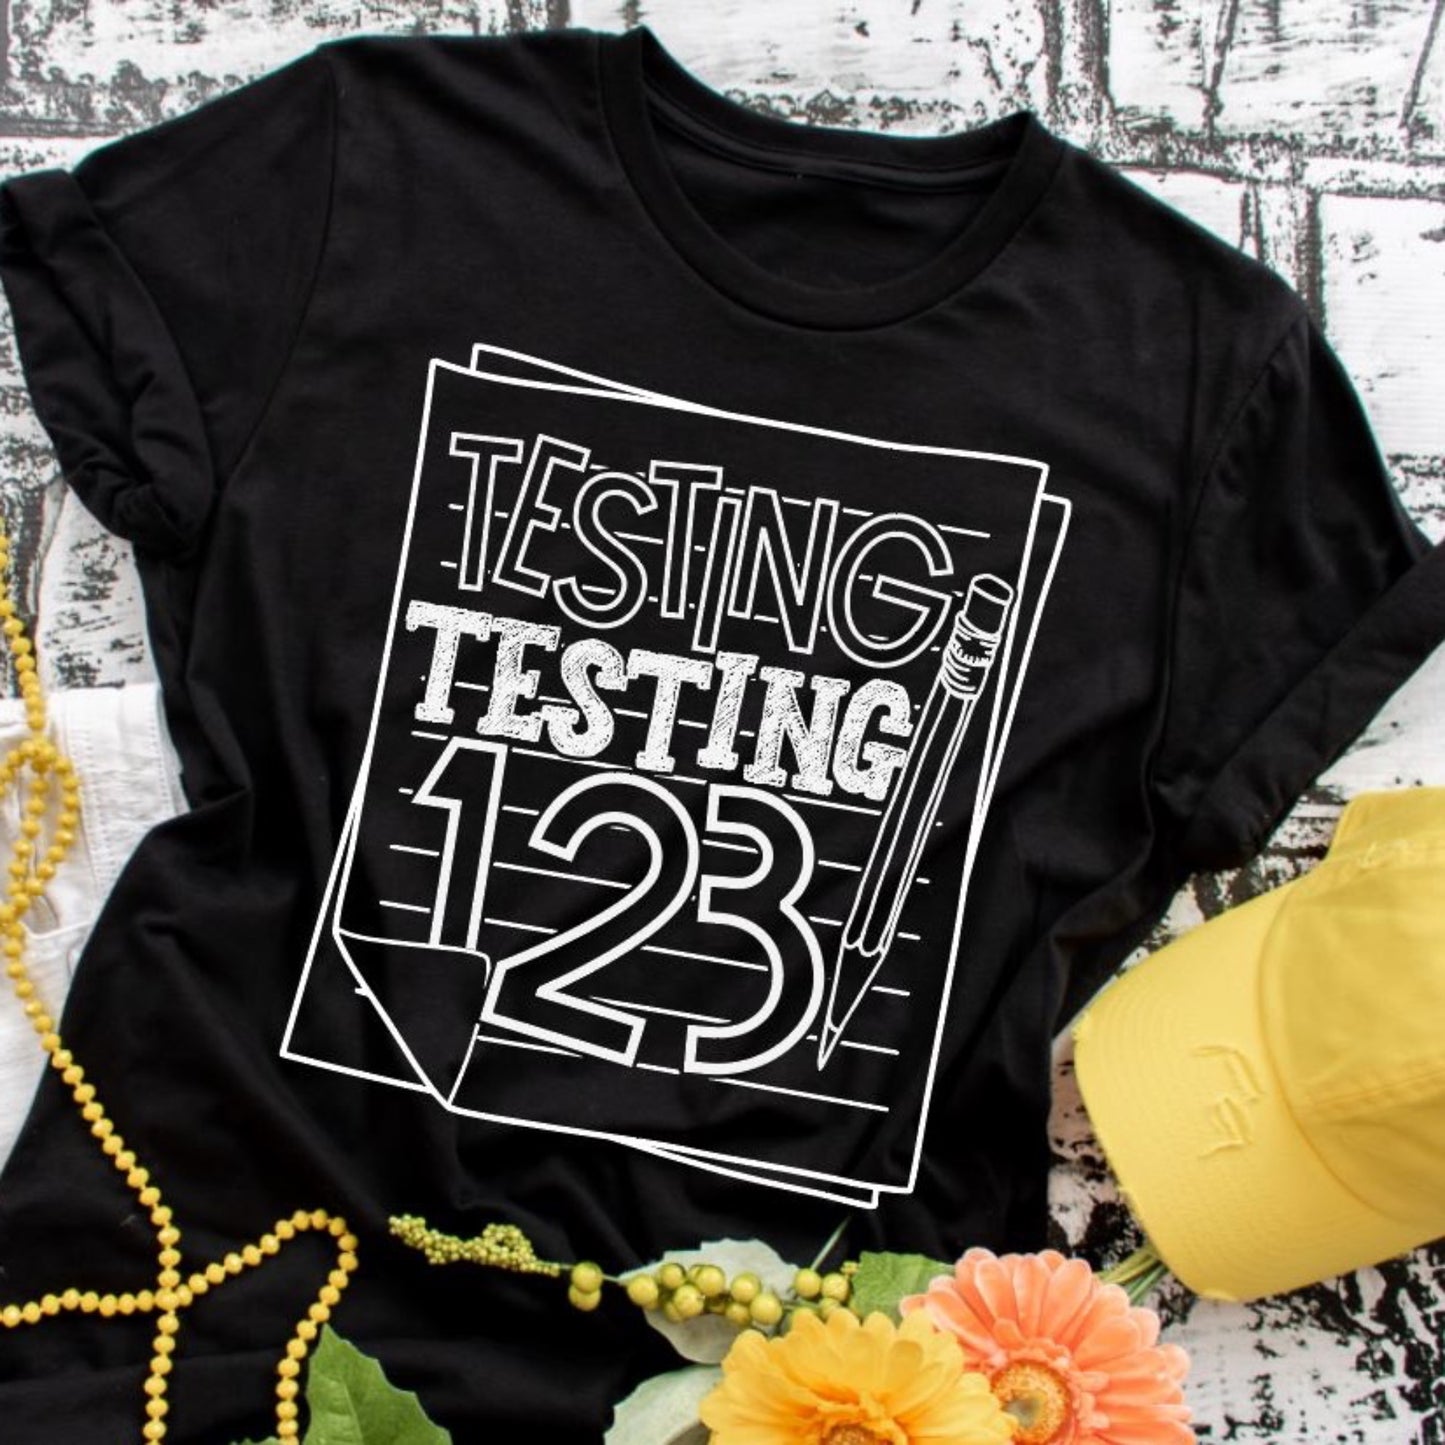 Testing Testing 123 Tee